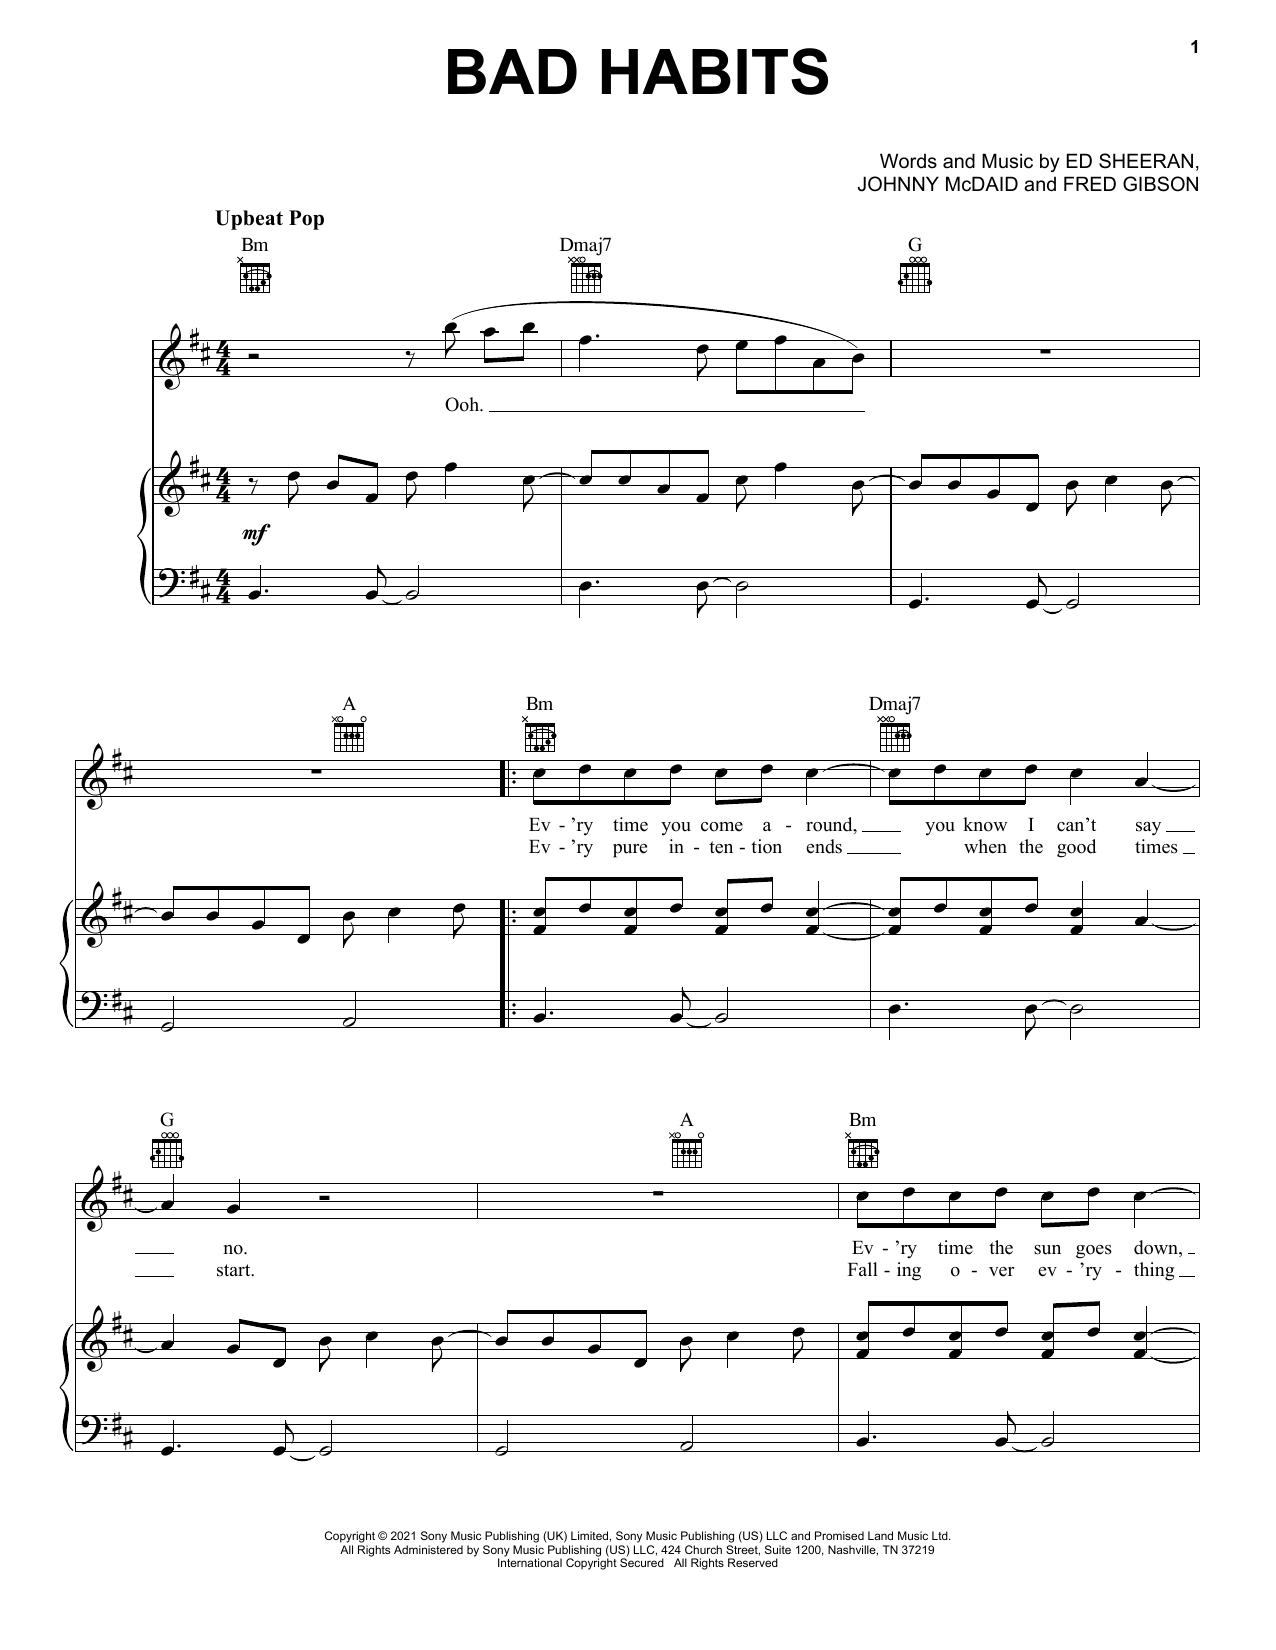 Ed Sheeran Bad Habits Sheet Music Notes & Chords for Alto Sax Duet - Download or Print PDF